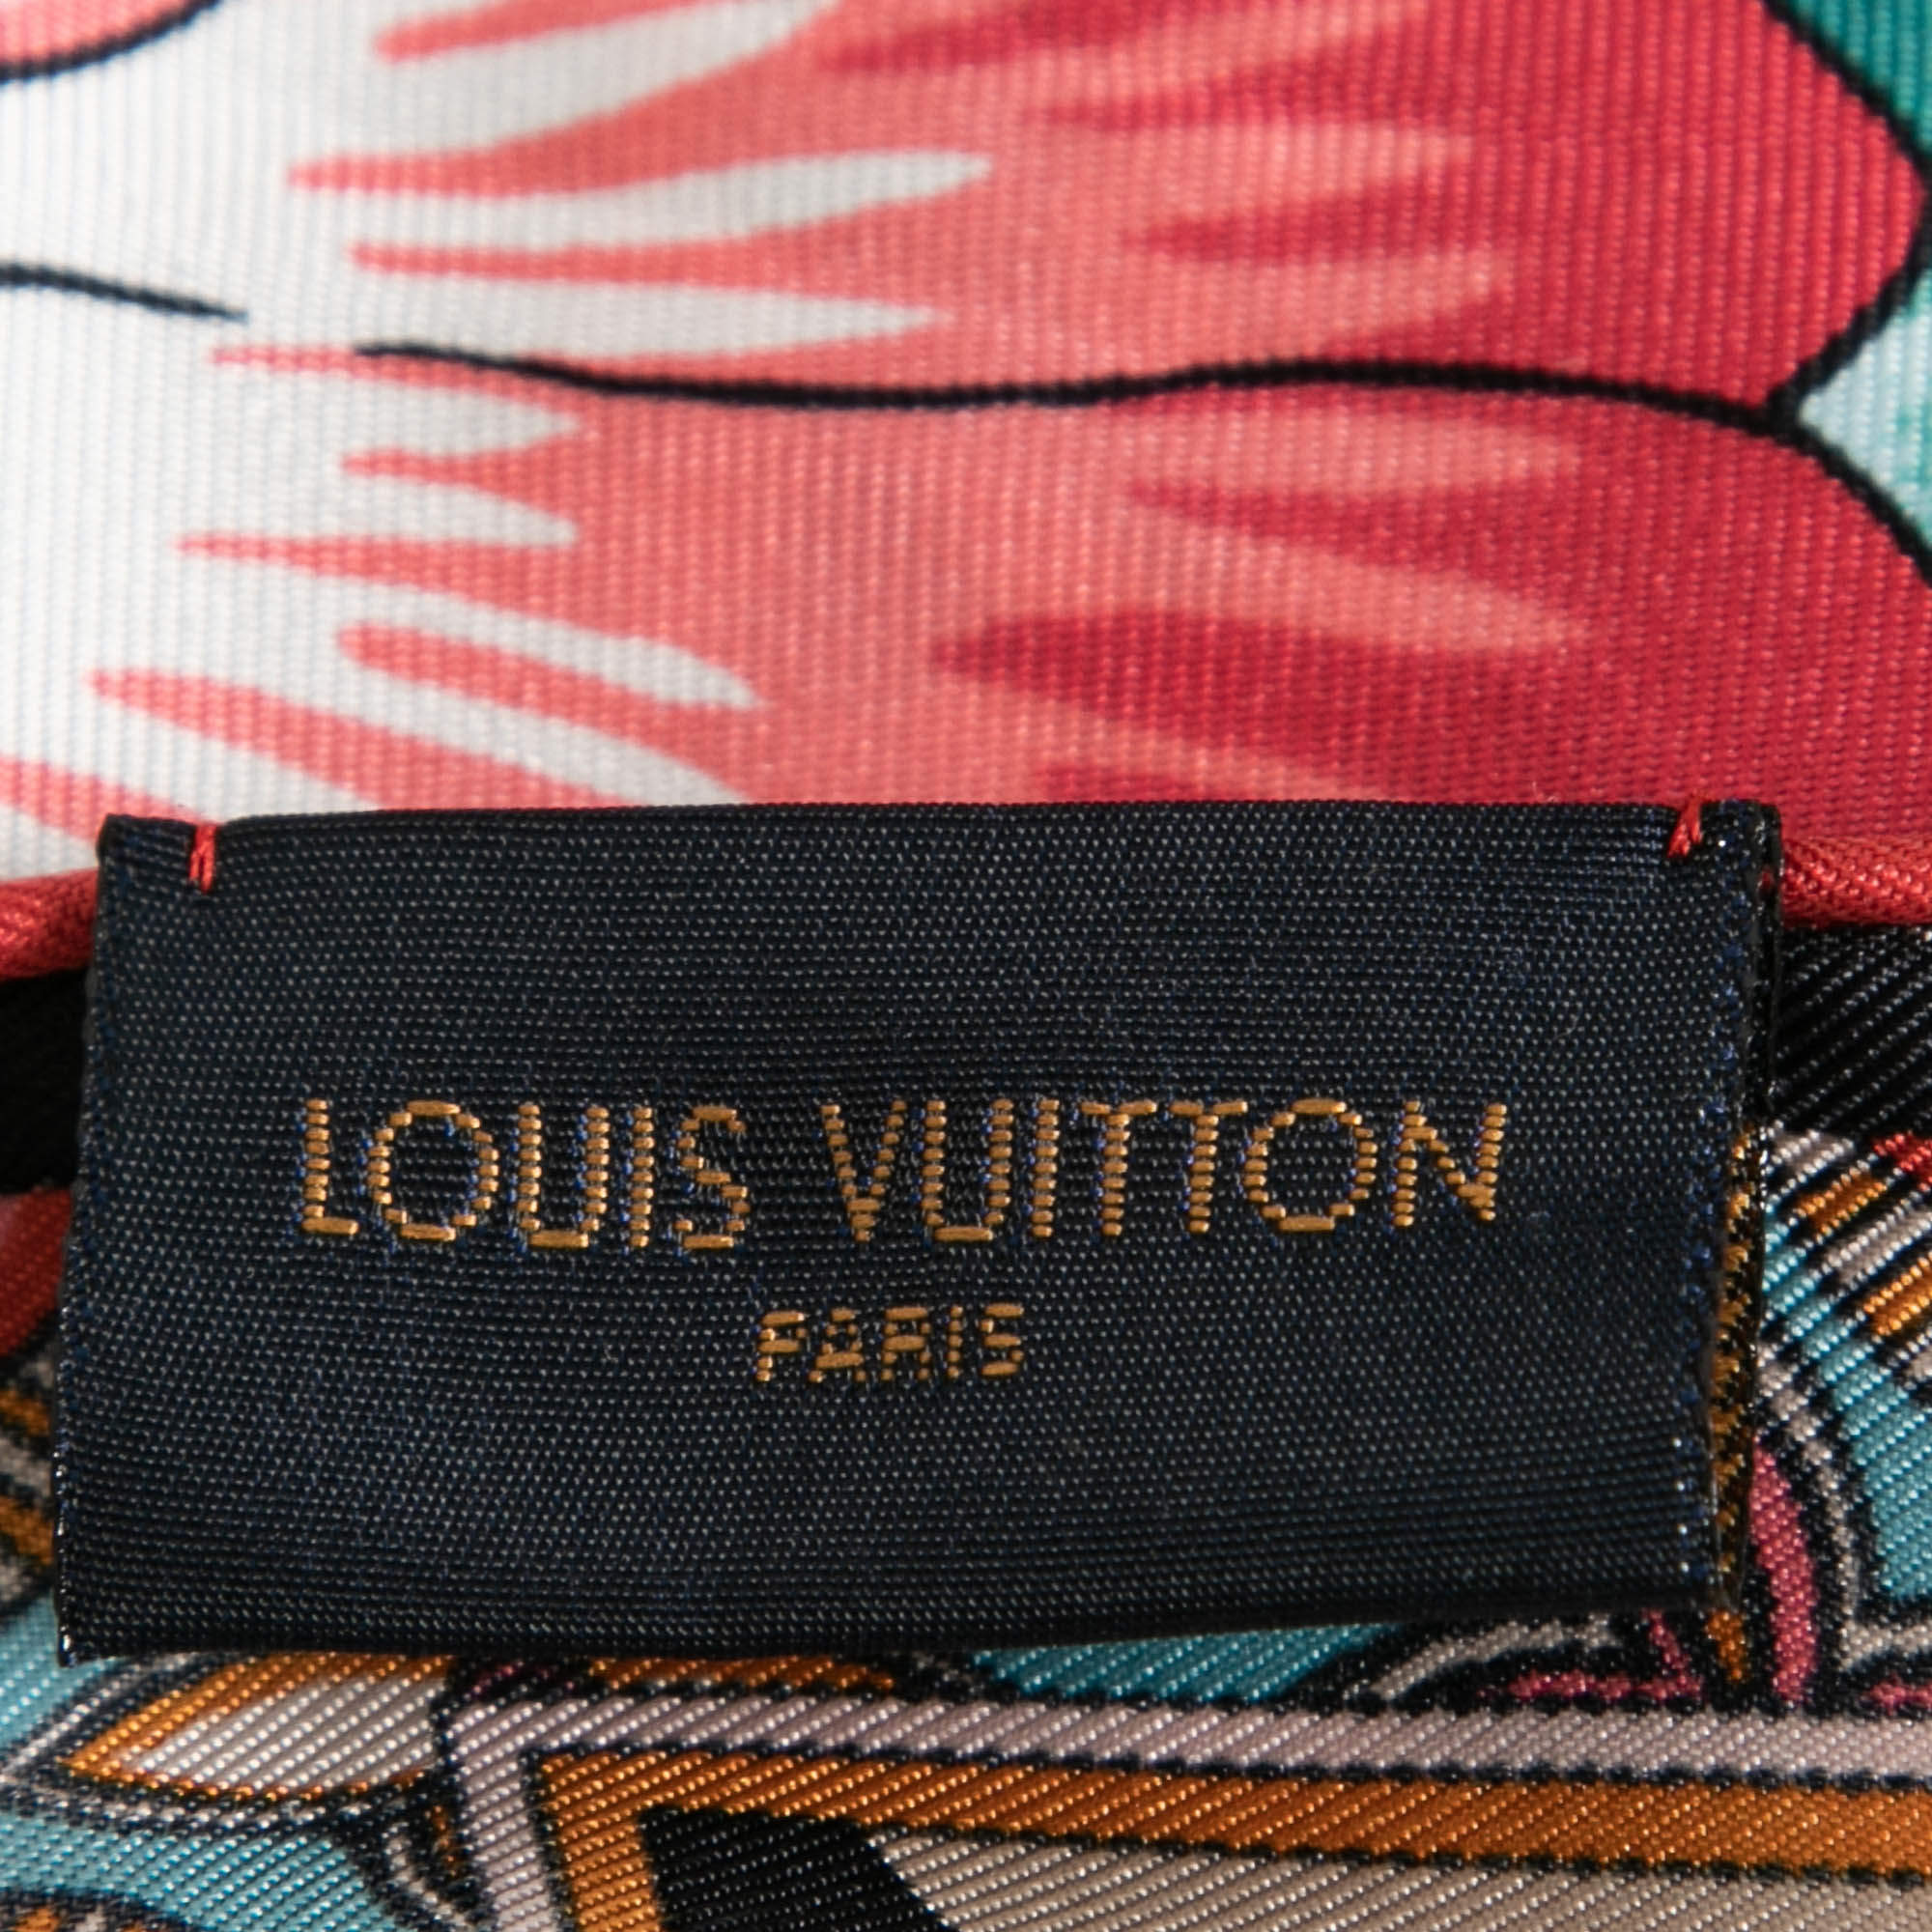 Louis Vuitton Multicolor Jungle Fever Silk Square Scarf Louis